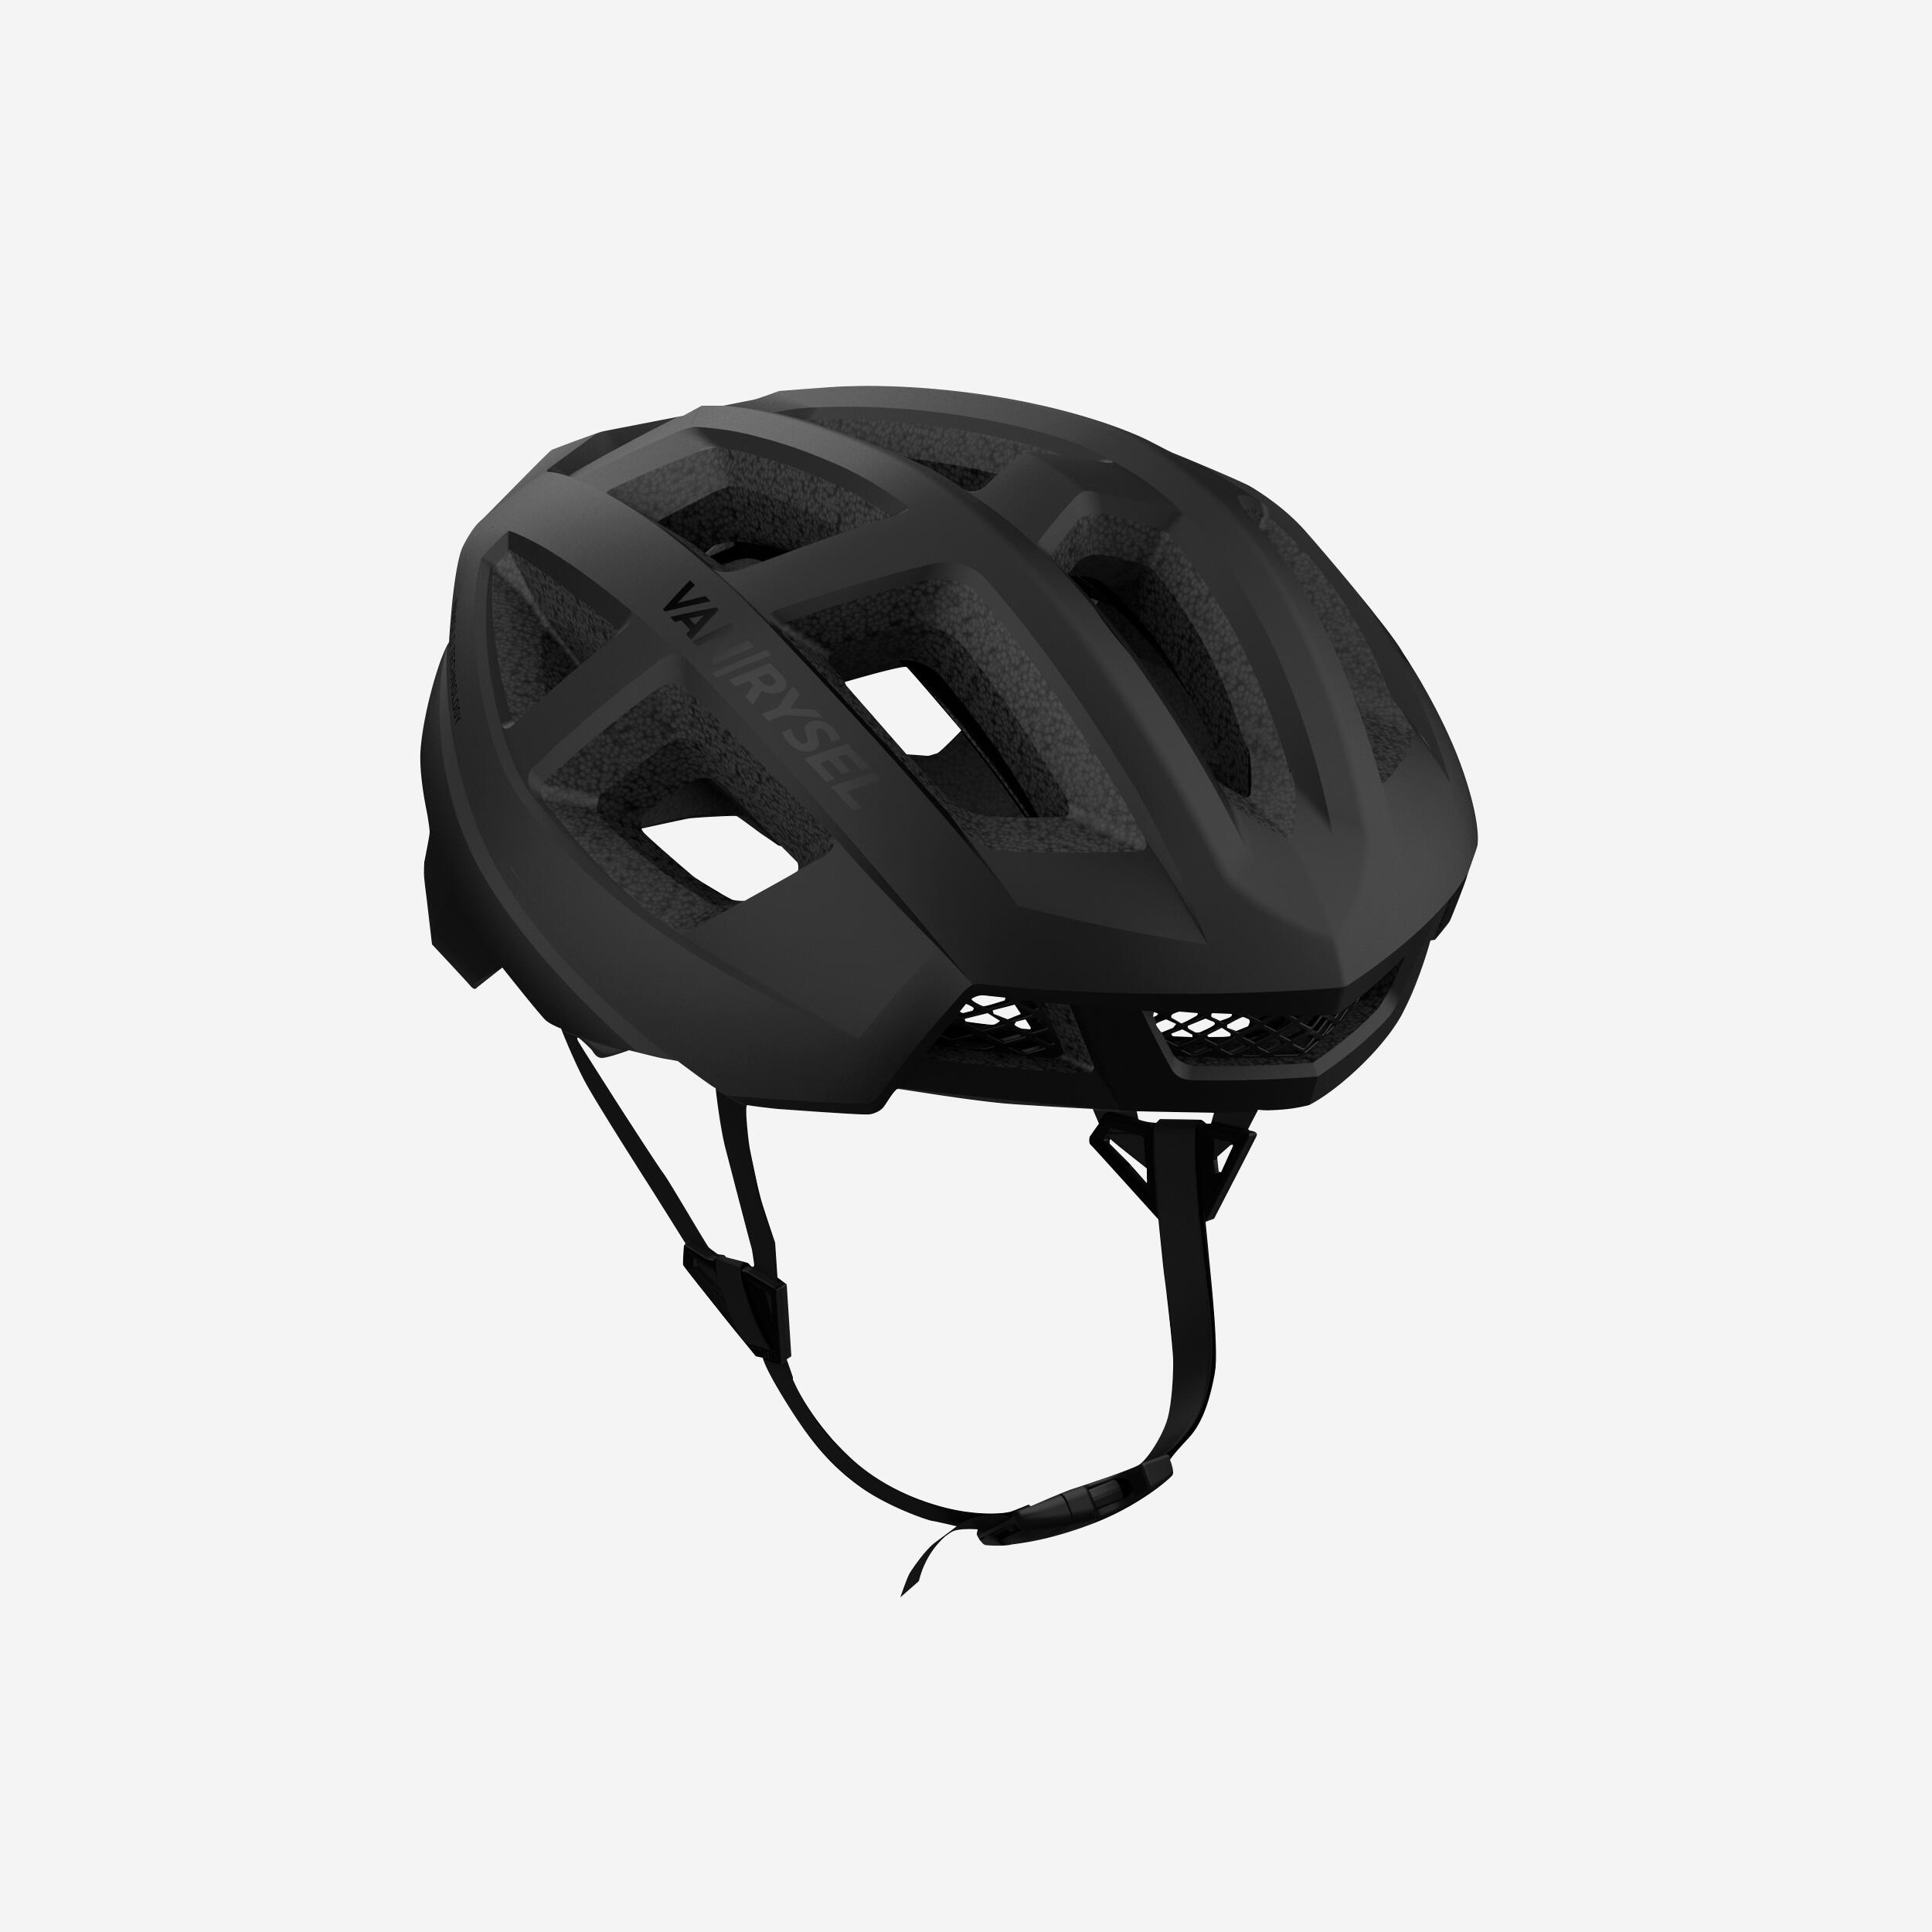 Racer Cycling Helmet - Black 3/7